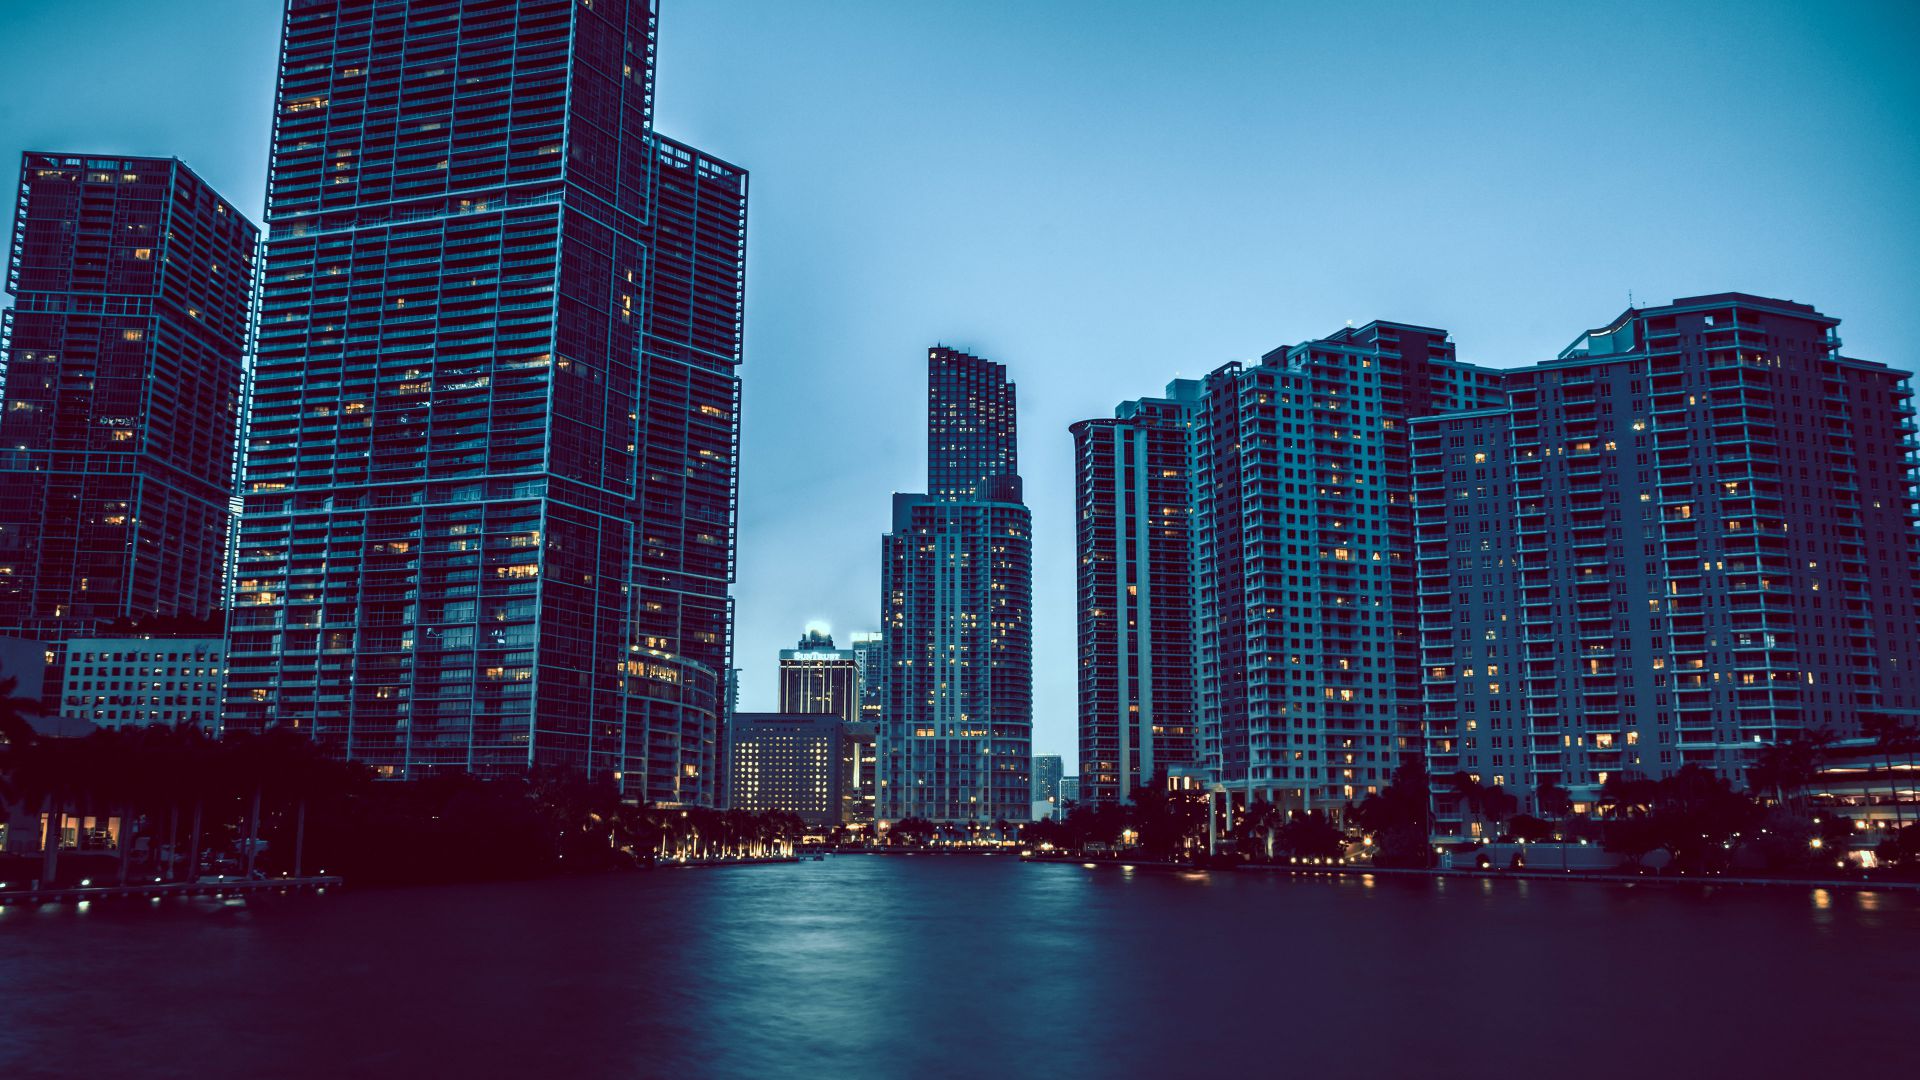 Майами, небоскребы, ночь, городские, туризм, путешествия, Miami, skyscrapers, night, cityscapes, tourism, travel (horizontal)